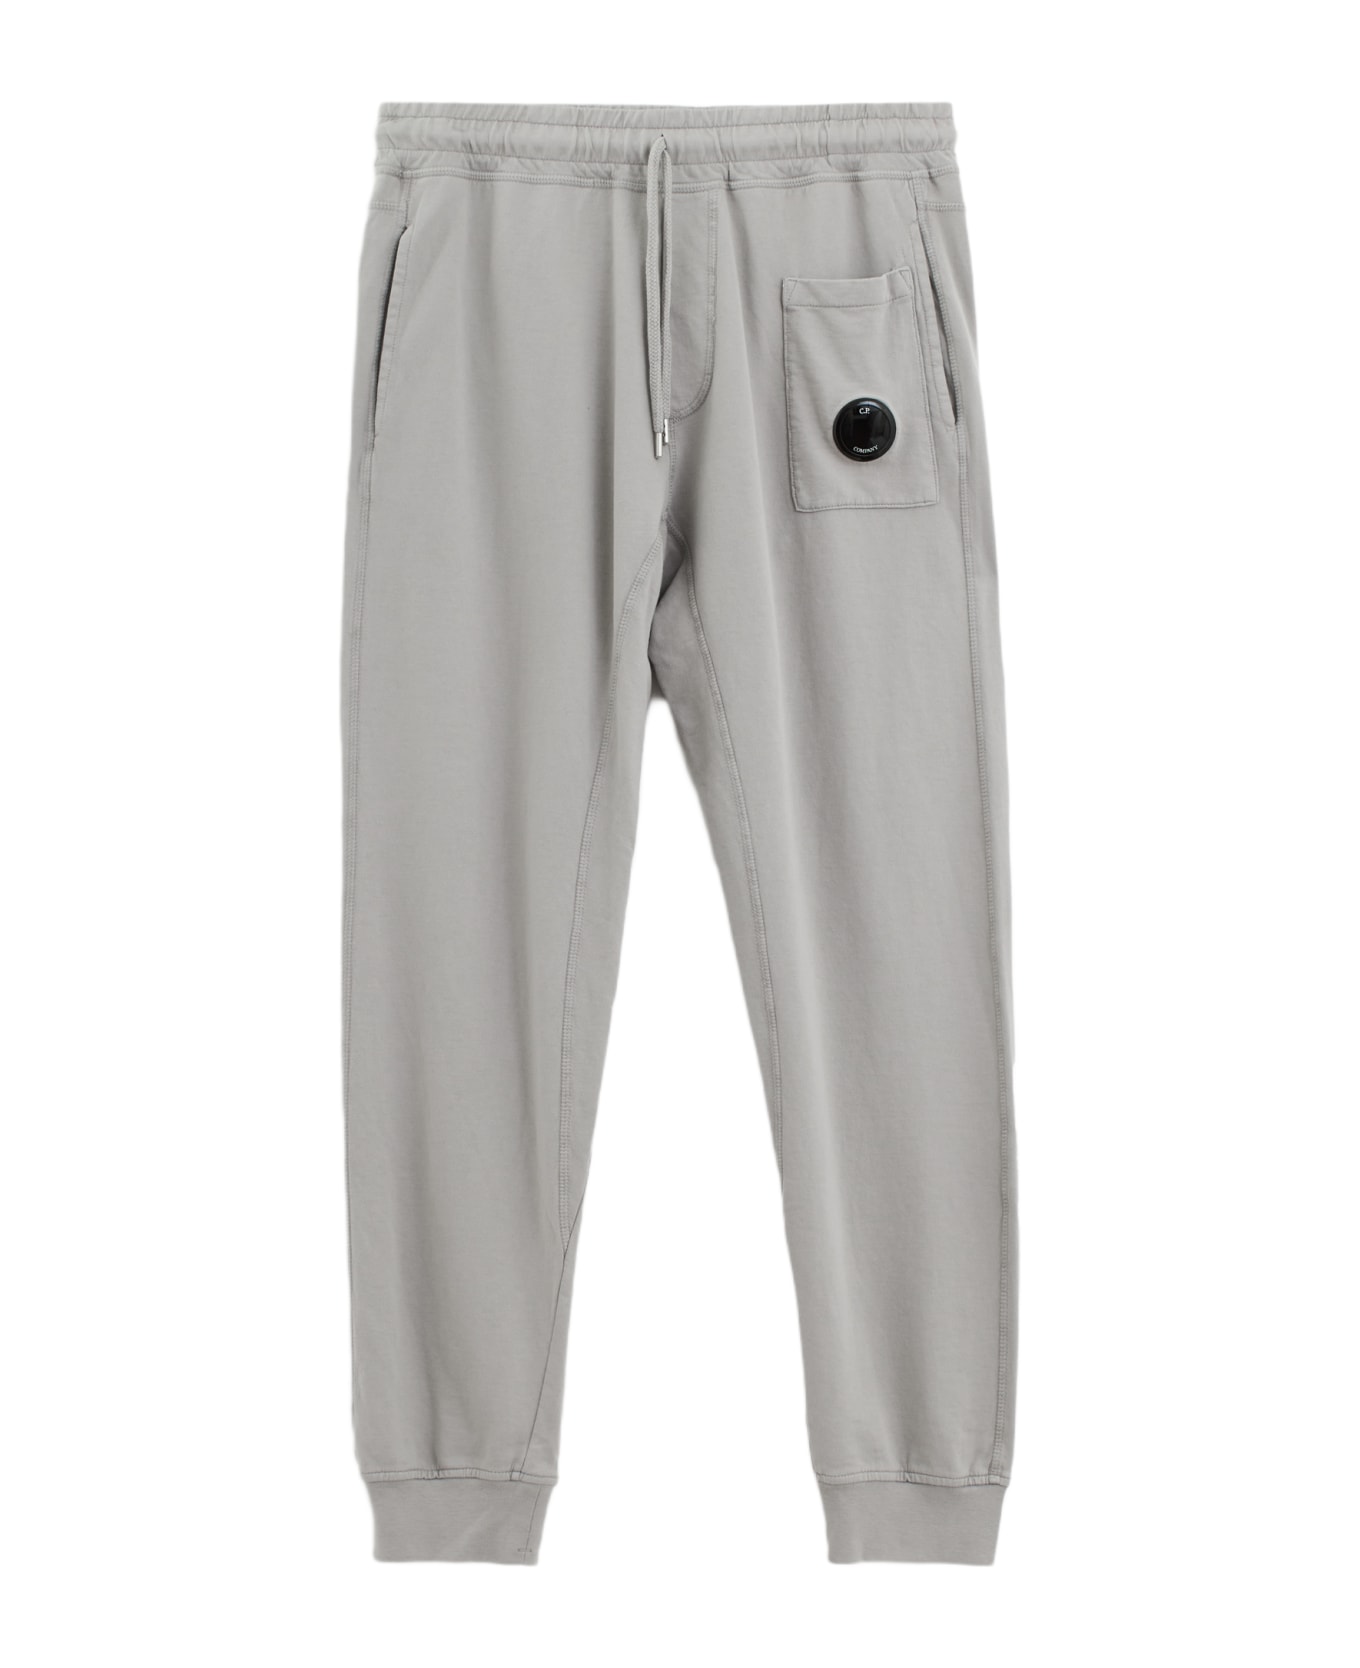 C.P. Company Pants - grey